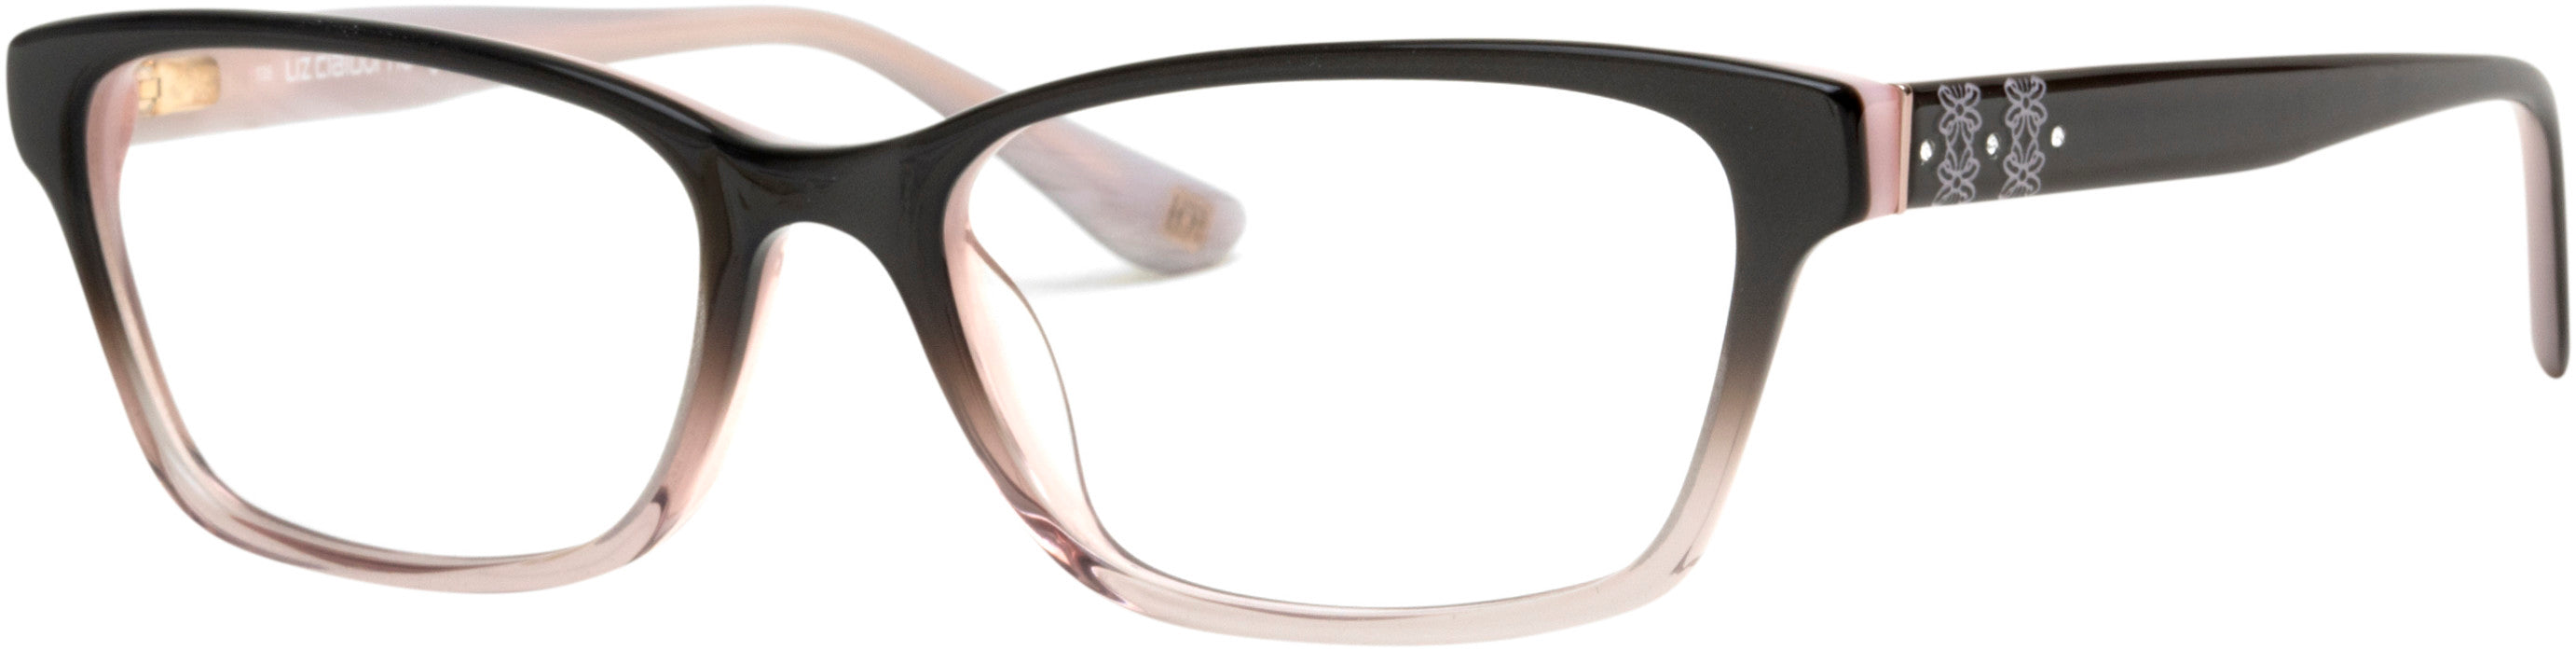  Liz Claiborne 640 Rectangular Eyeglasses 0HAQ-0HAQ  Gray Pink (00 Demo Lens)